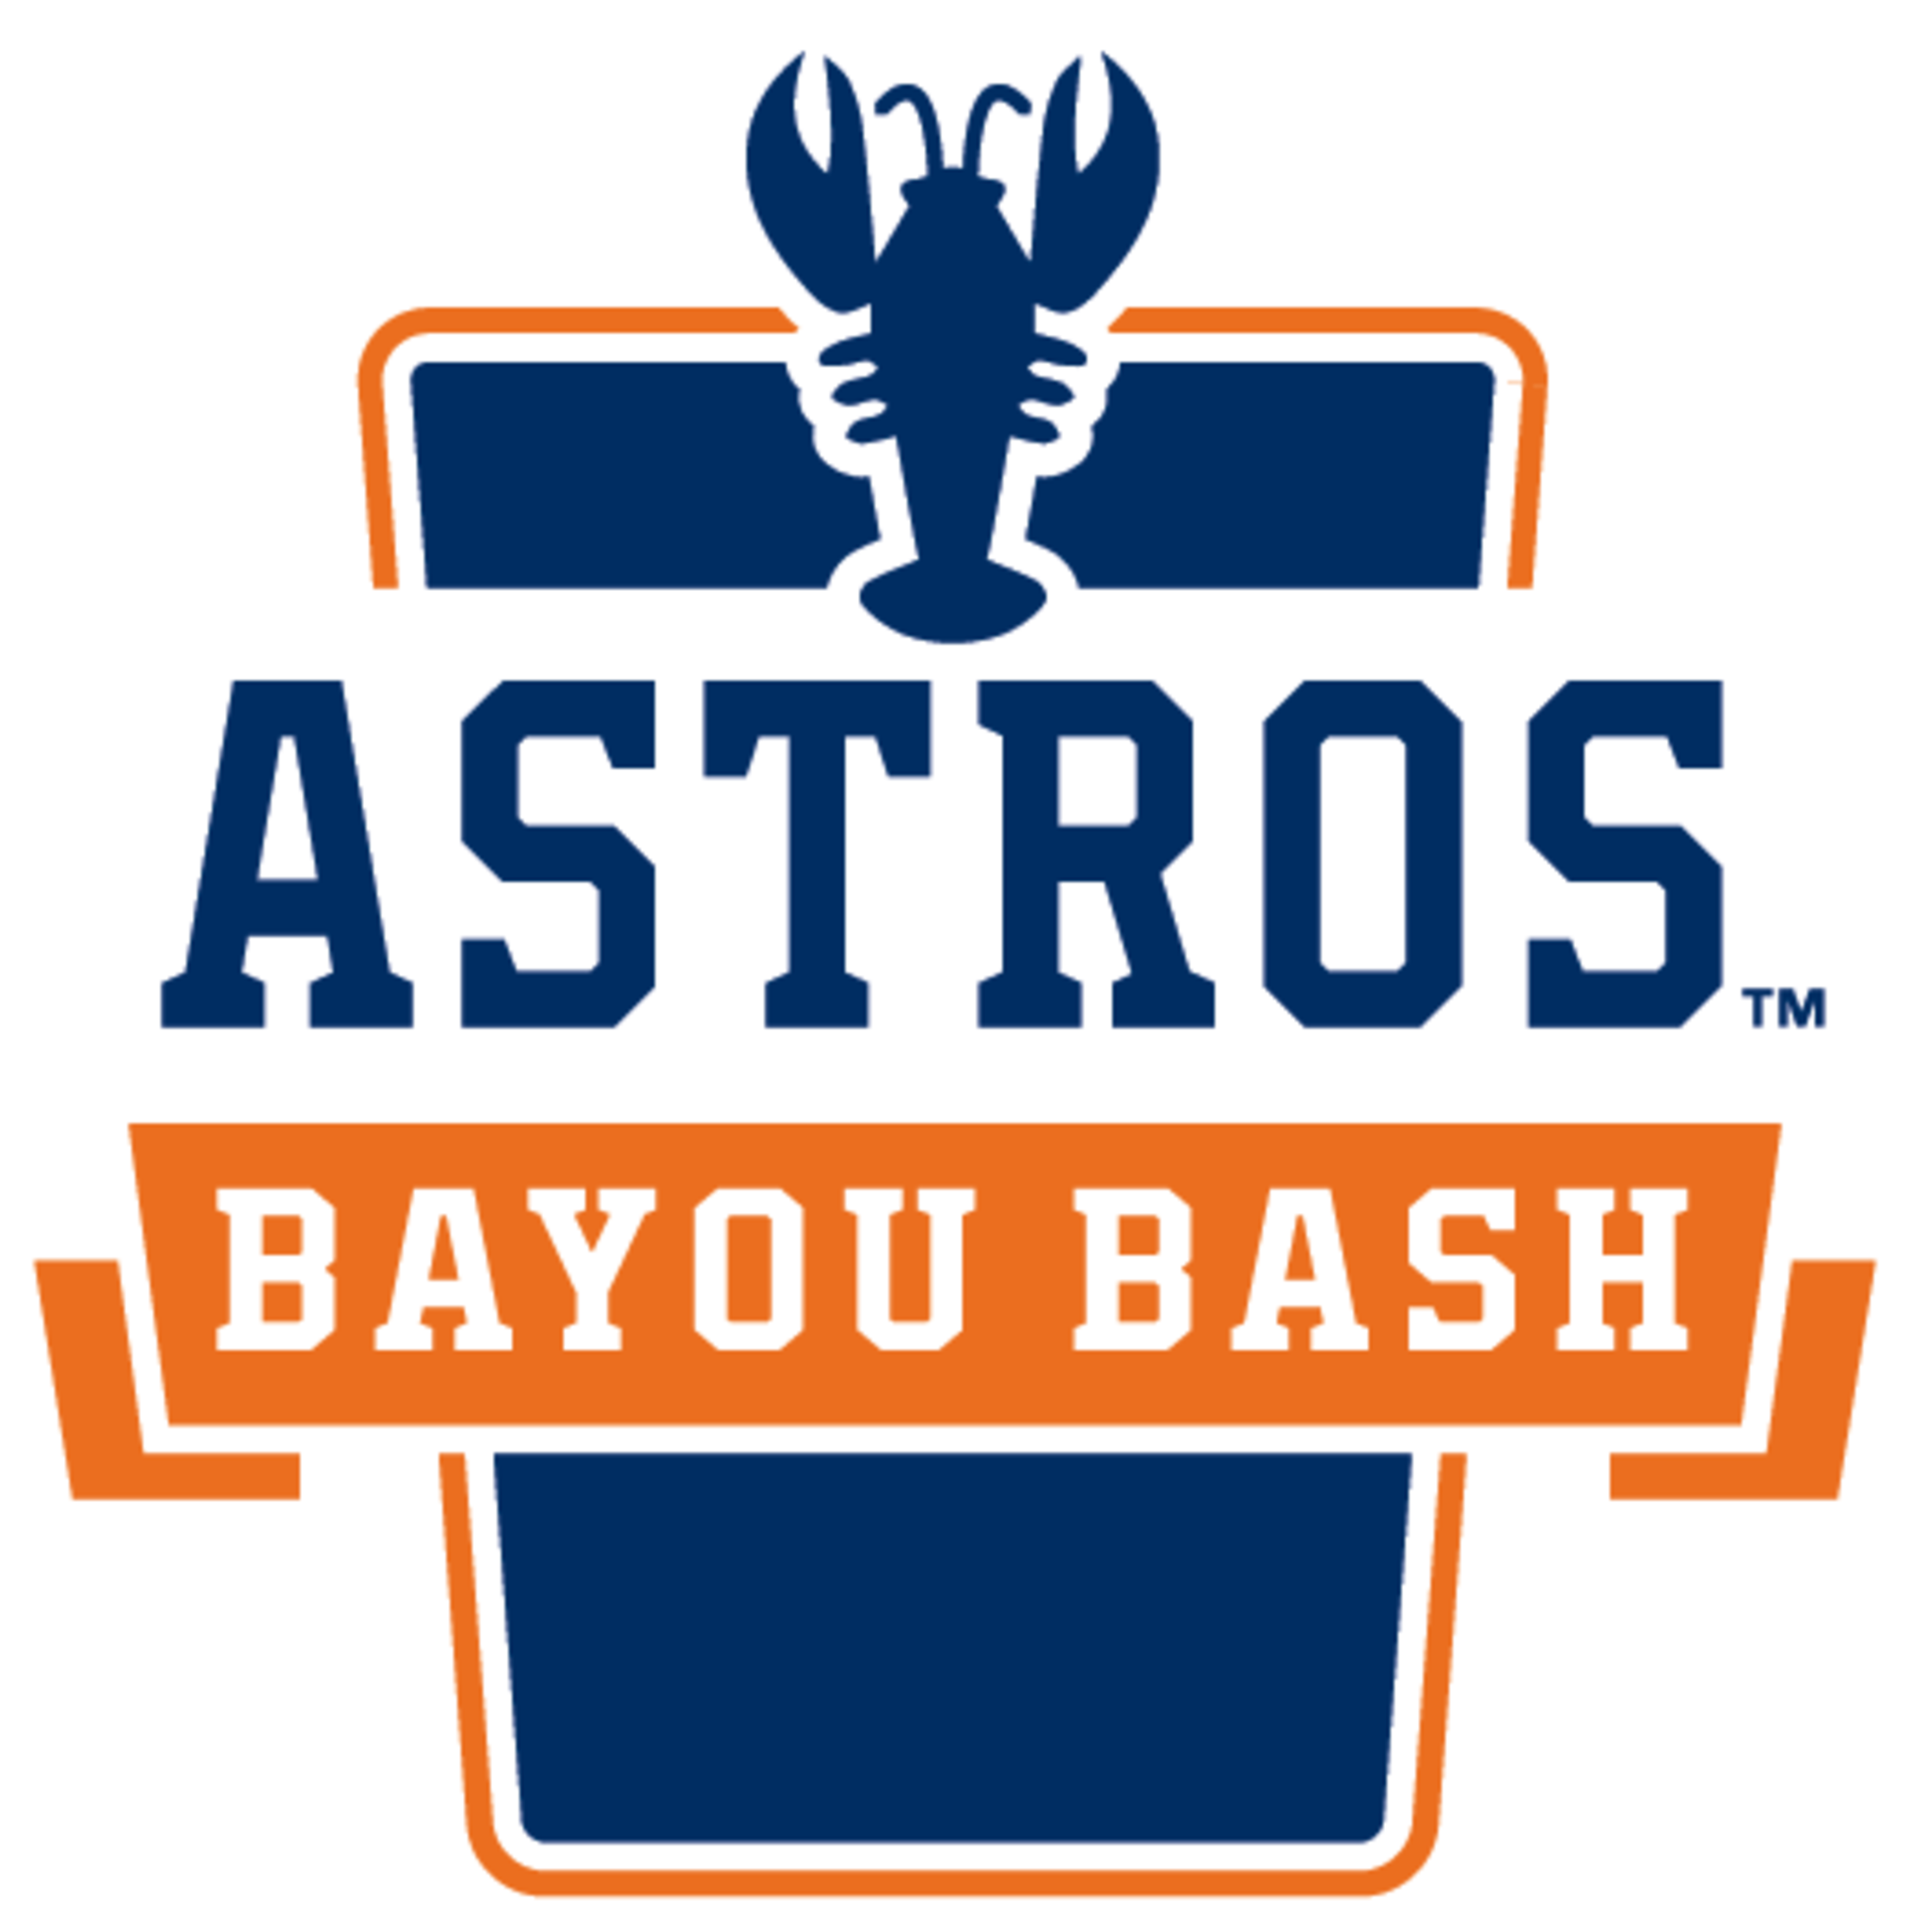 Bayou Bash Street Festival Houston Astros